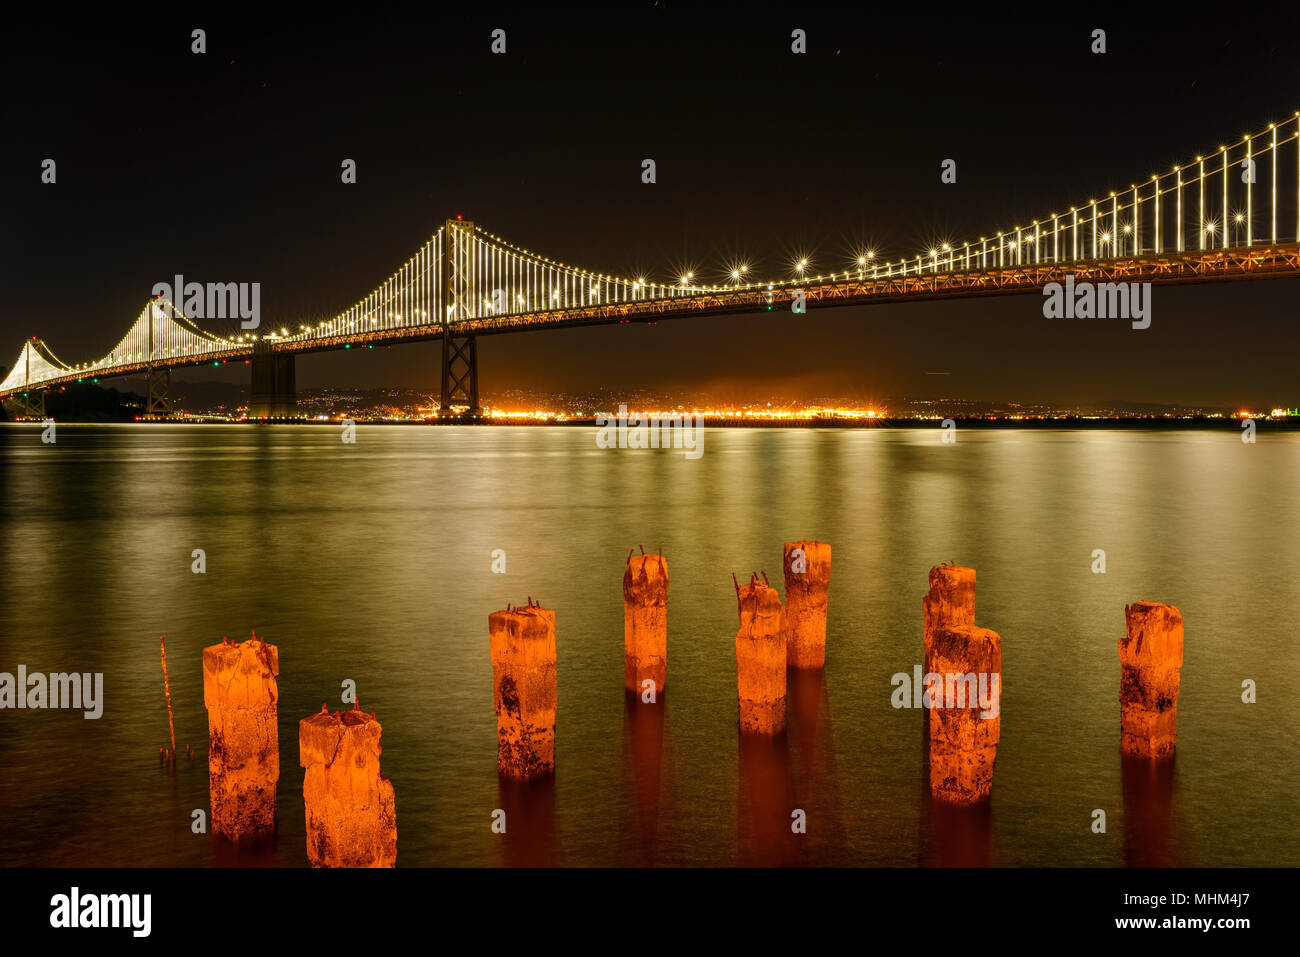 Bay Bridge at Night - A night view of San Francisco – Oakland Bay Bridge spanning over calm San Francisco Bay, California, USA. Stock Photo